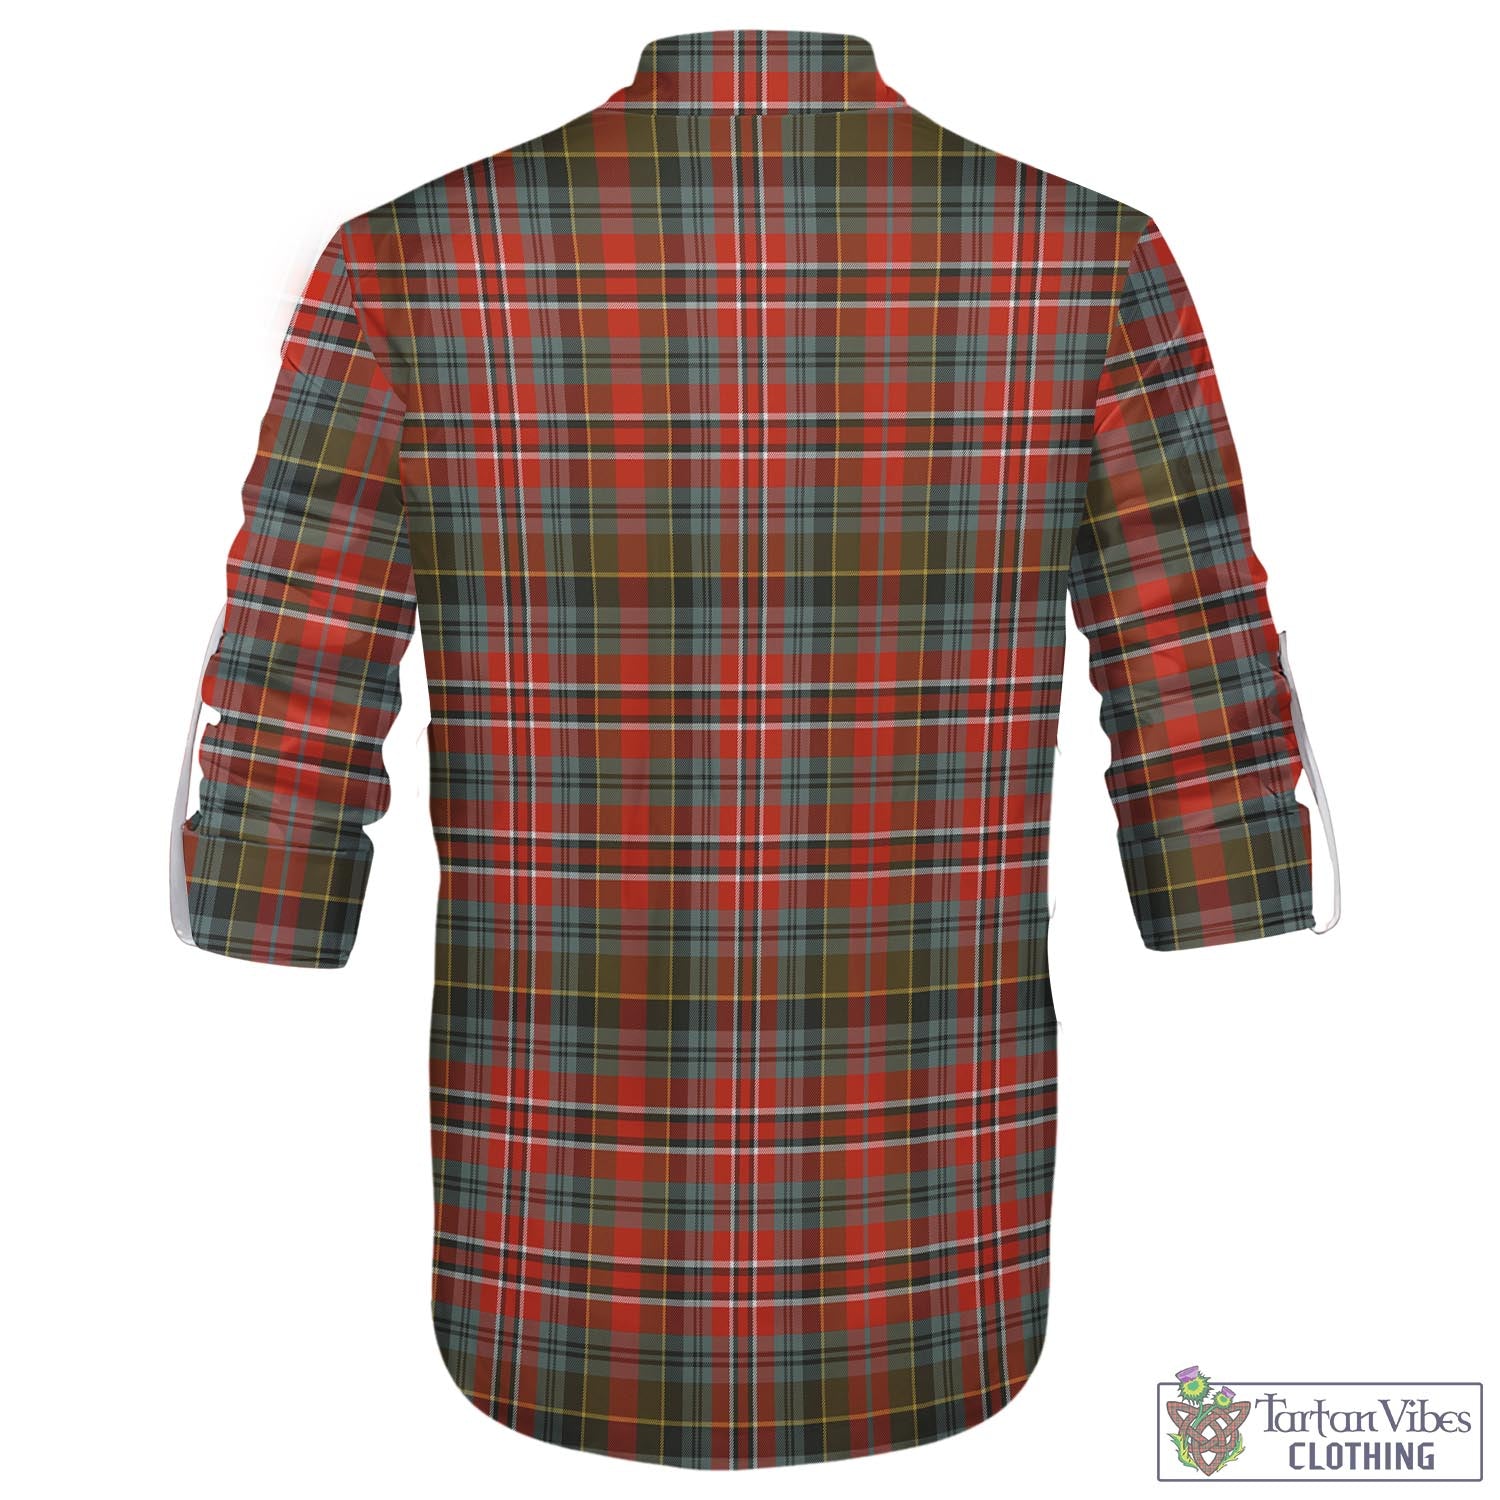 Tartan Vibes Clothing MacPherson Weathered Tartan Men's Scottish Traditional Jacobite Ghillie Kilt Shirt with Family Crest